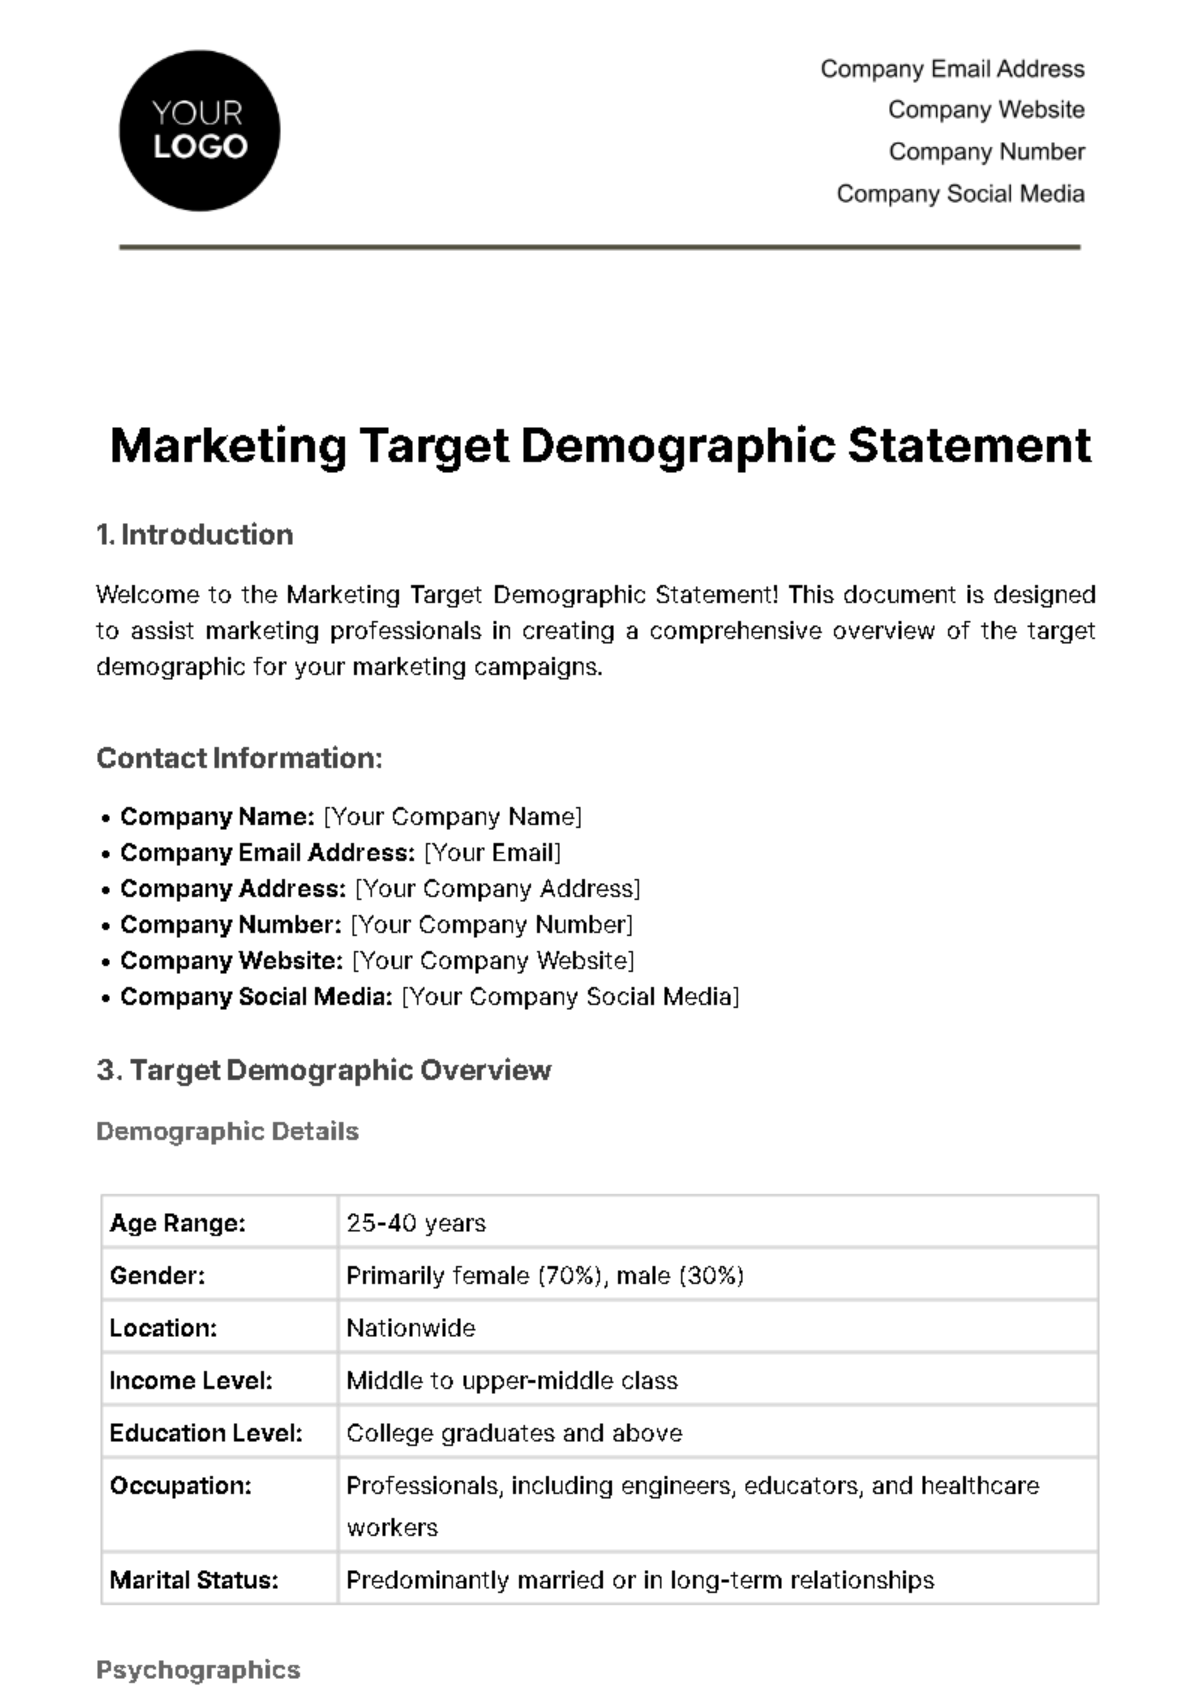 Free Marketing Target Demographic Statement Template